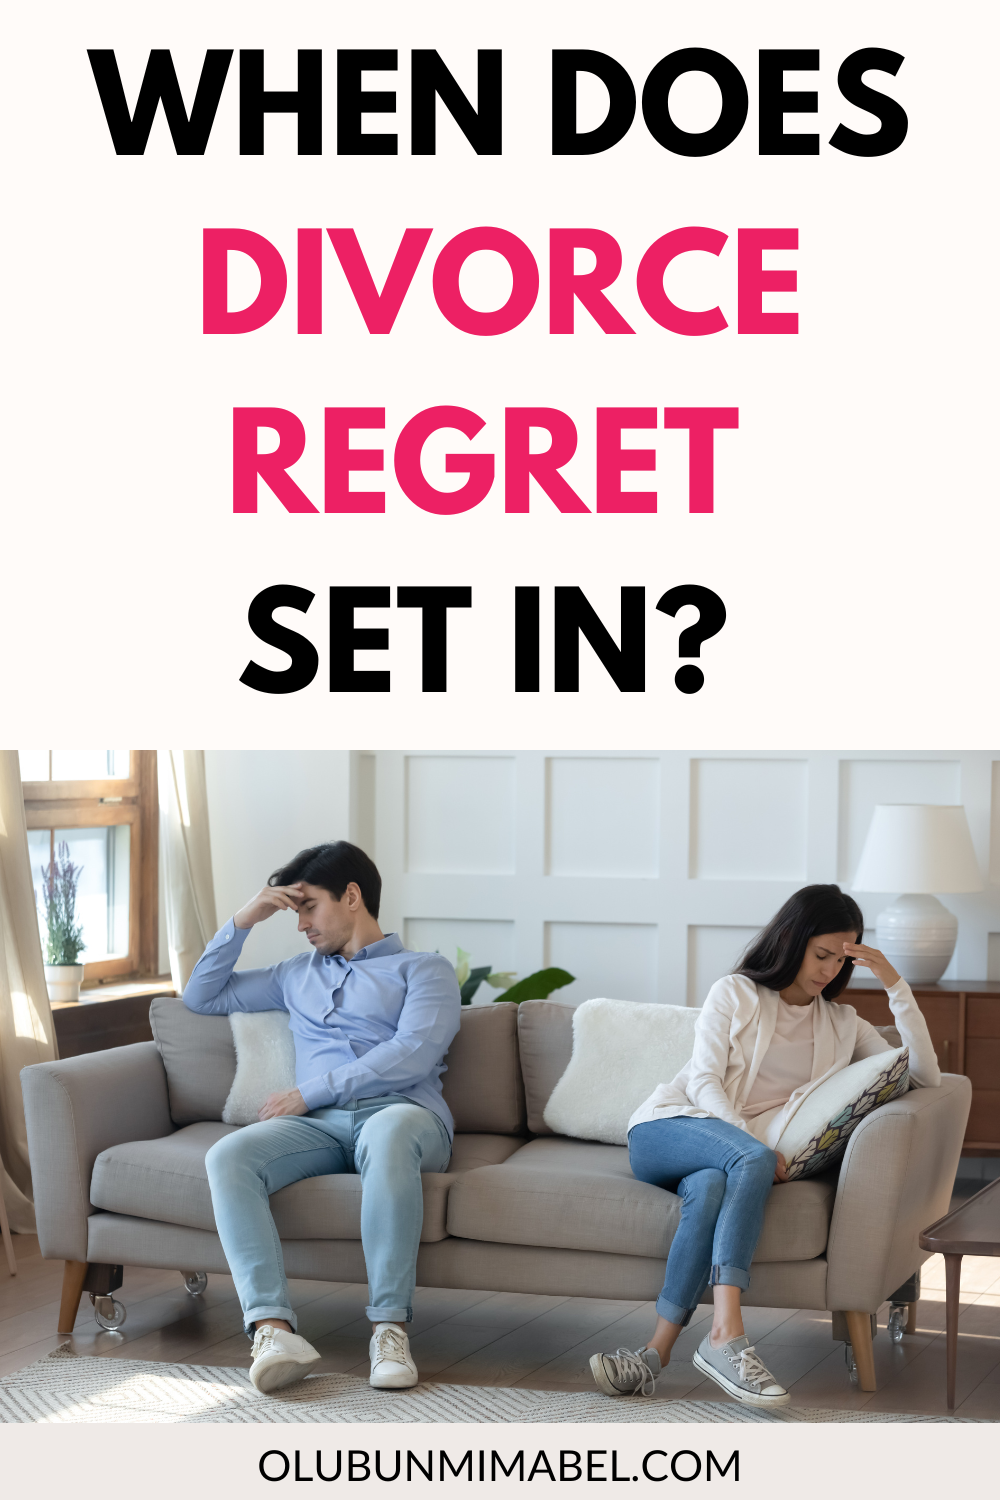 When Does Divorce Regret Set In?